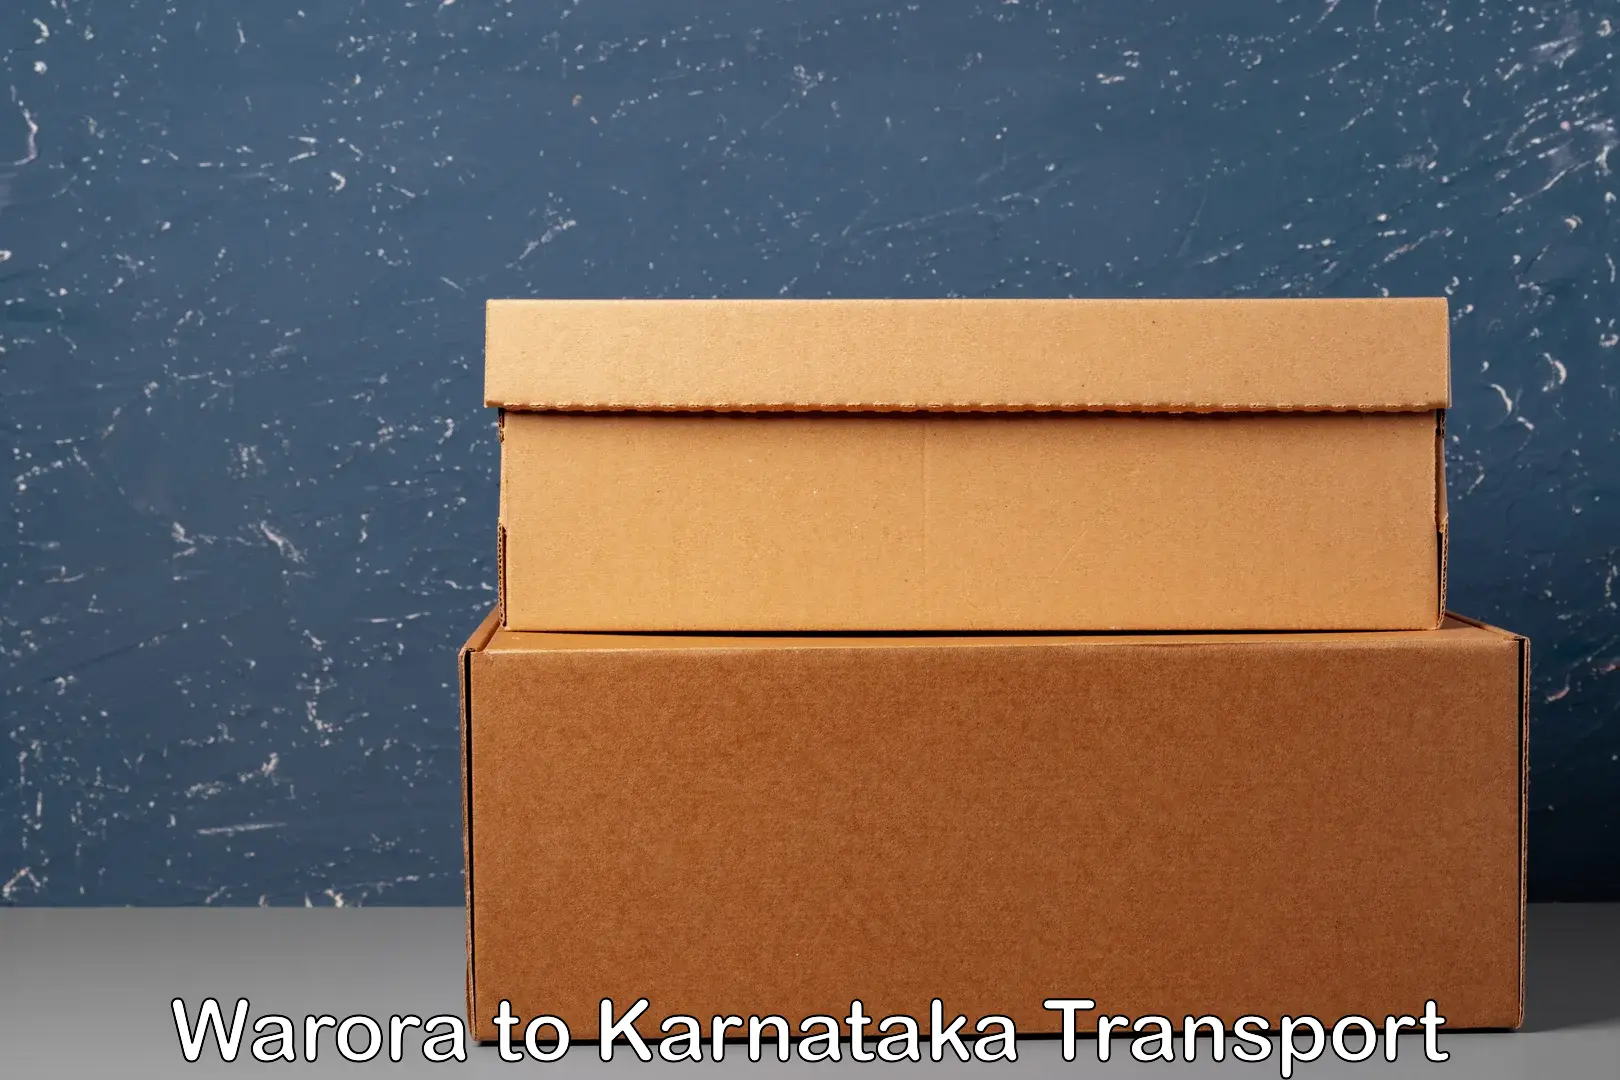 Truck transport companies in India in Warora to Karnataka